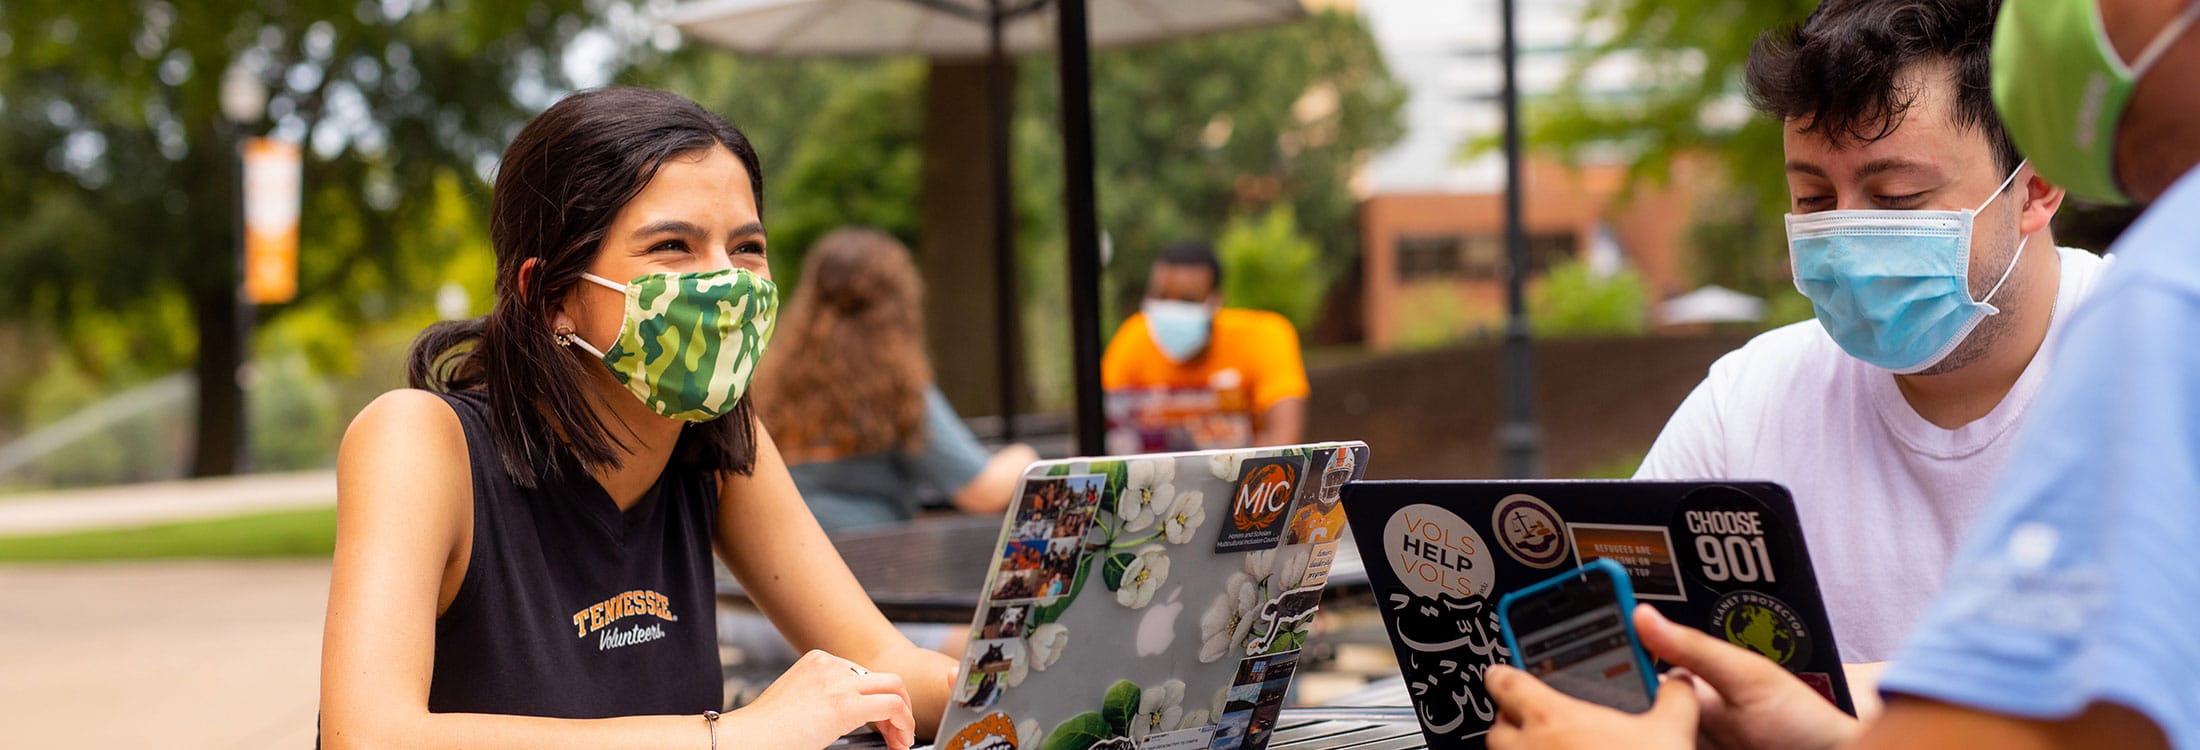 Students wearing masks and social distancing